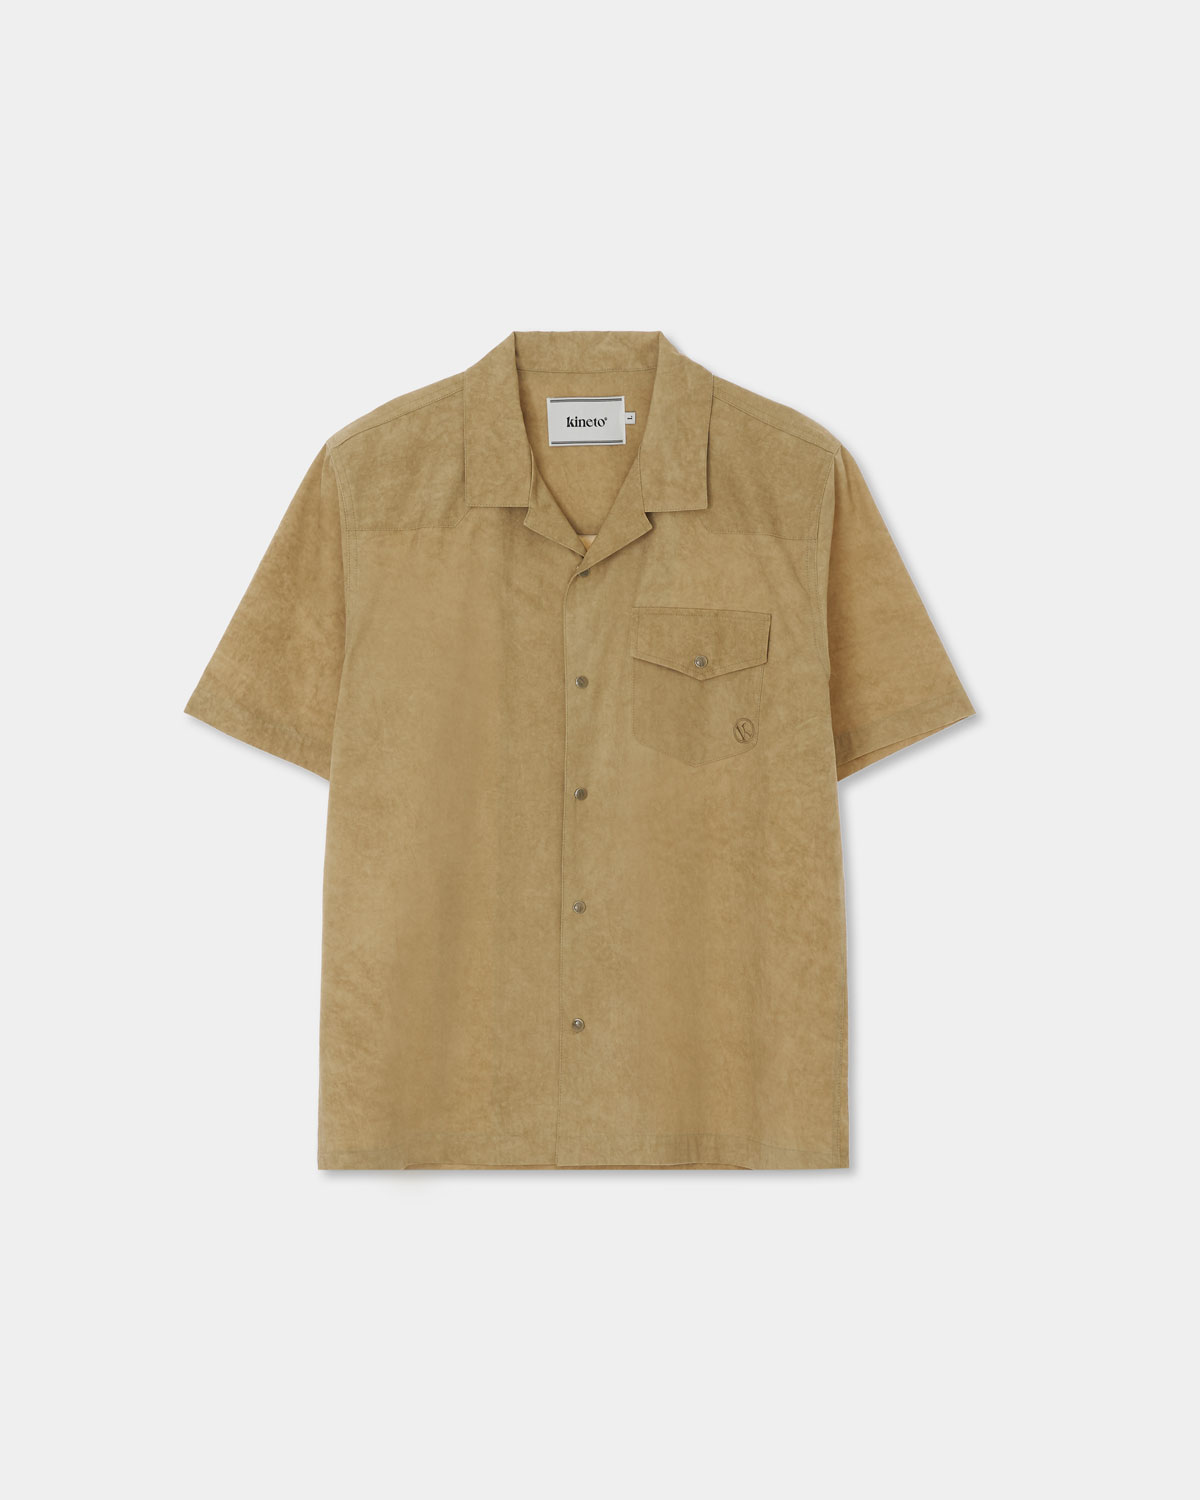 Western Dyed Milling Open Collar Shirt_Camel_W_예약 배송 05/15